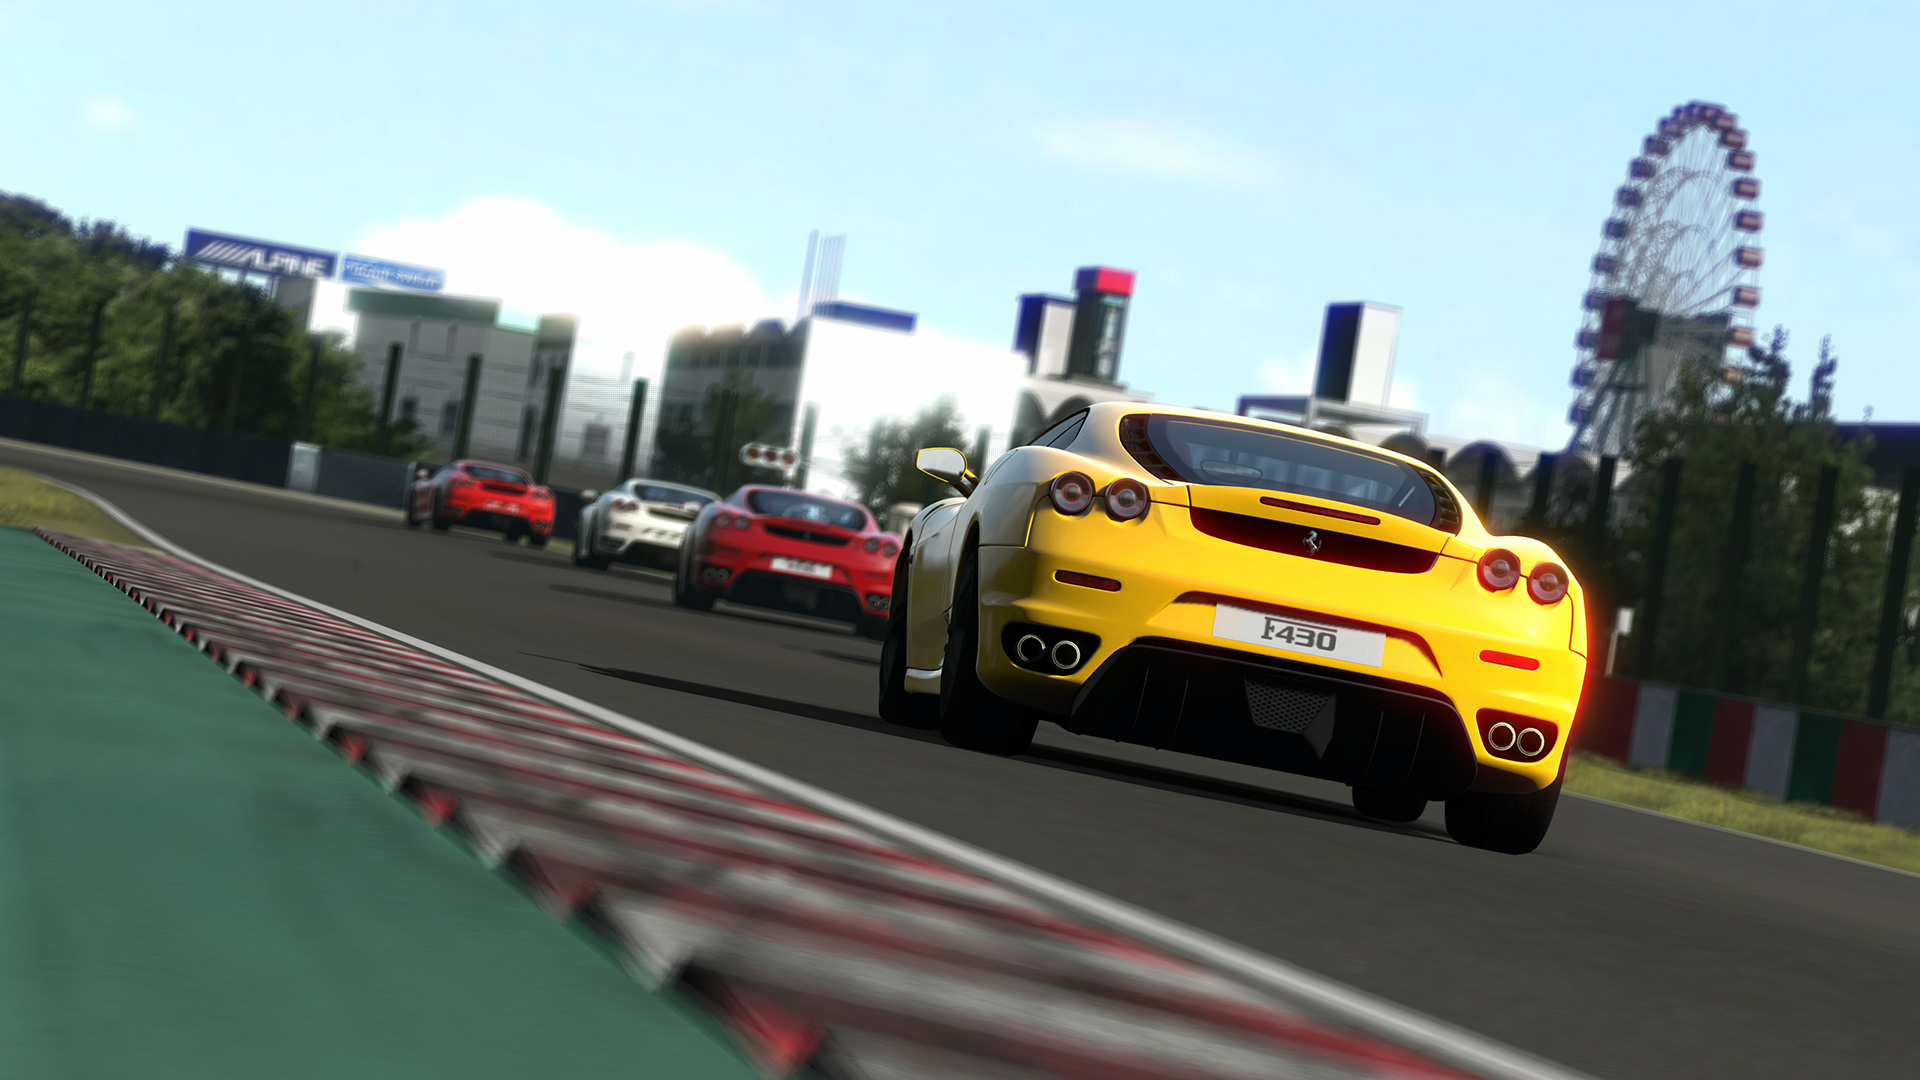 Gran Turismo 5 Prologue demo, free download Oct. 24th